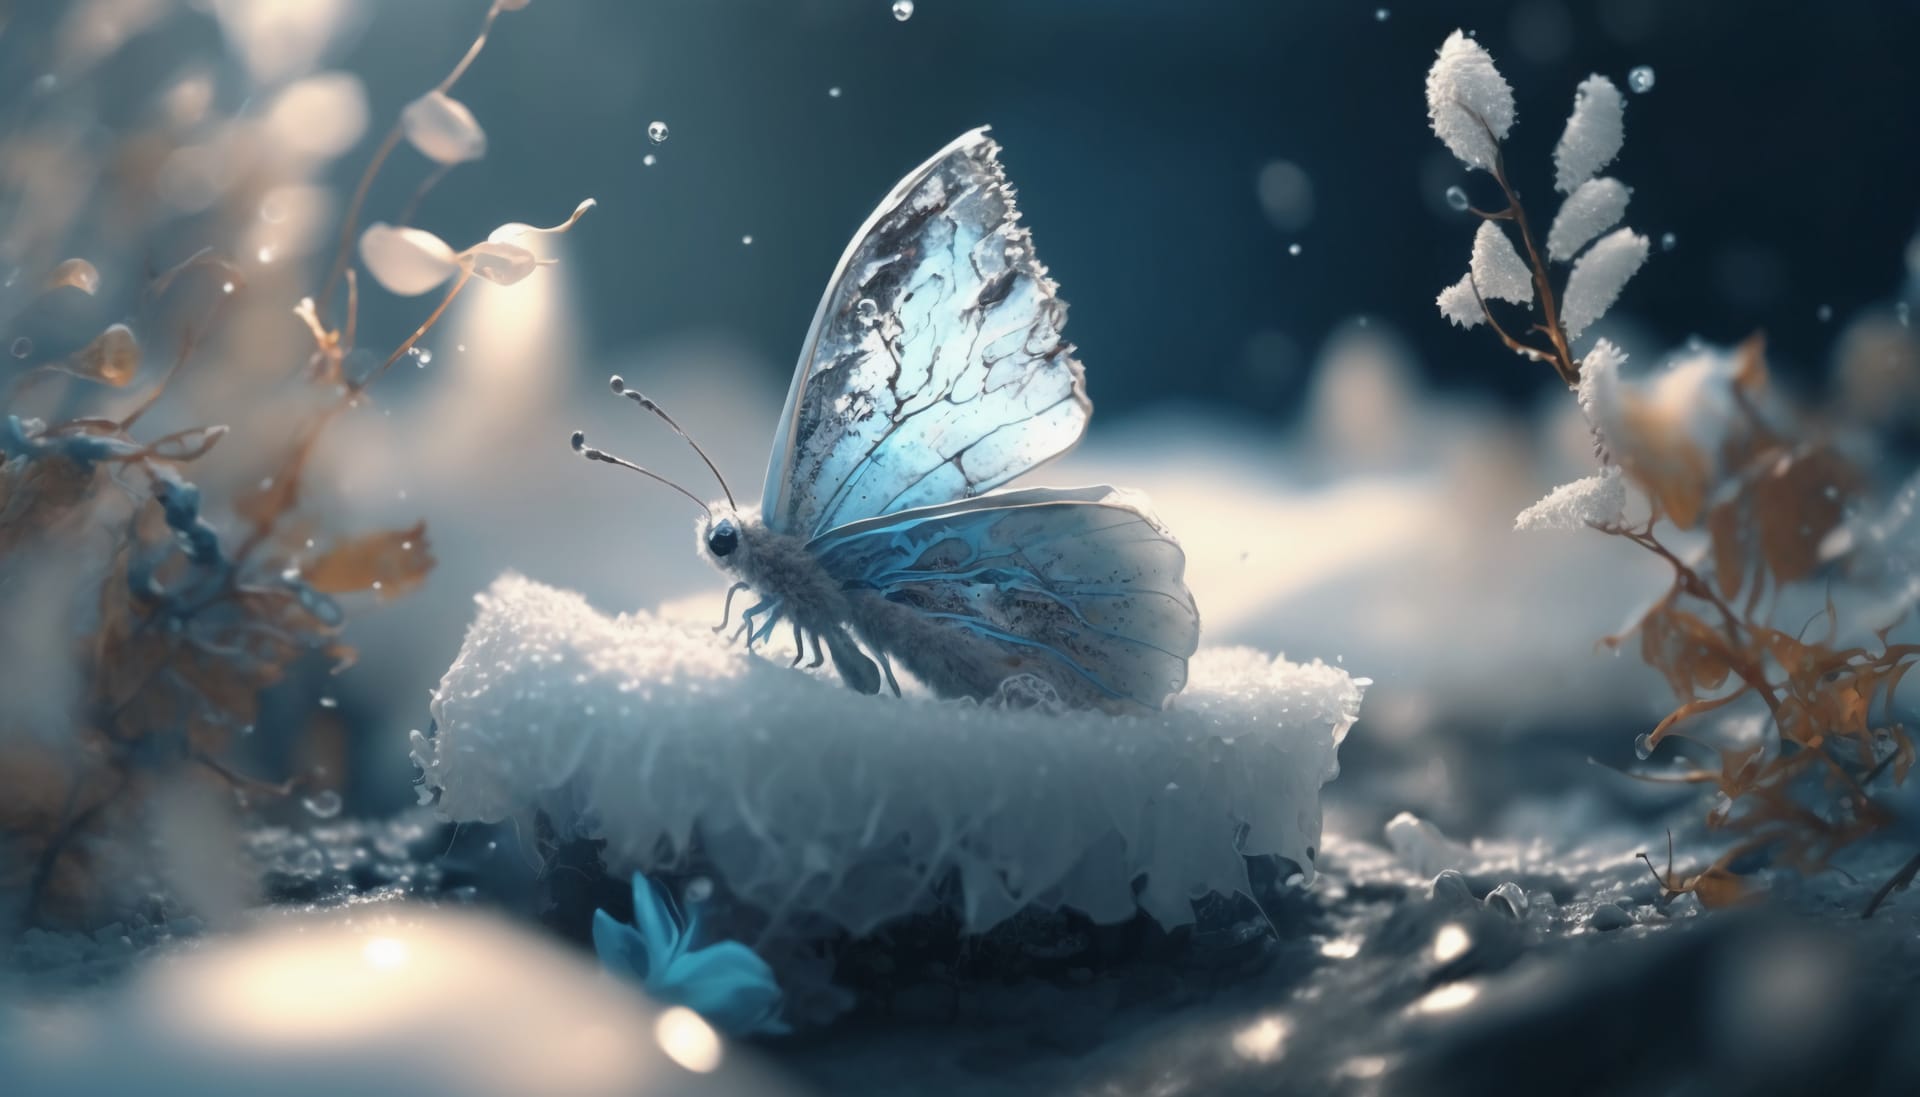 Ice snowa light blue ice butterfly falls fine image